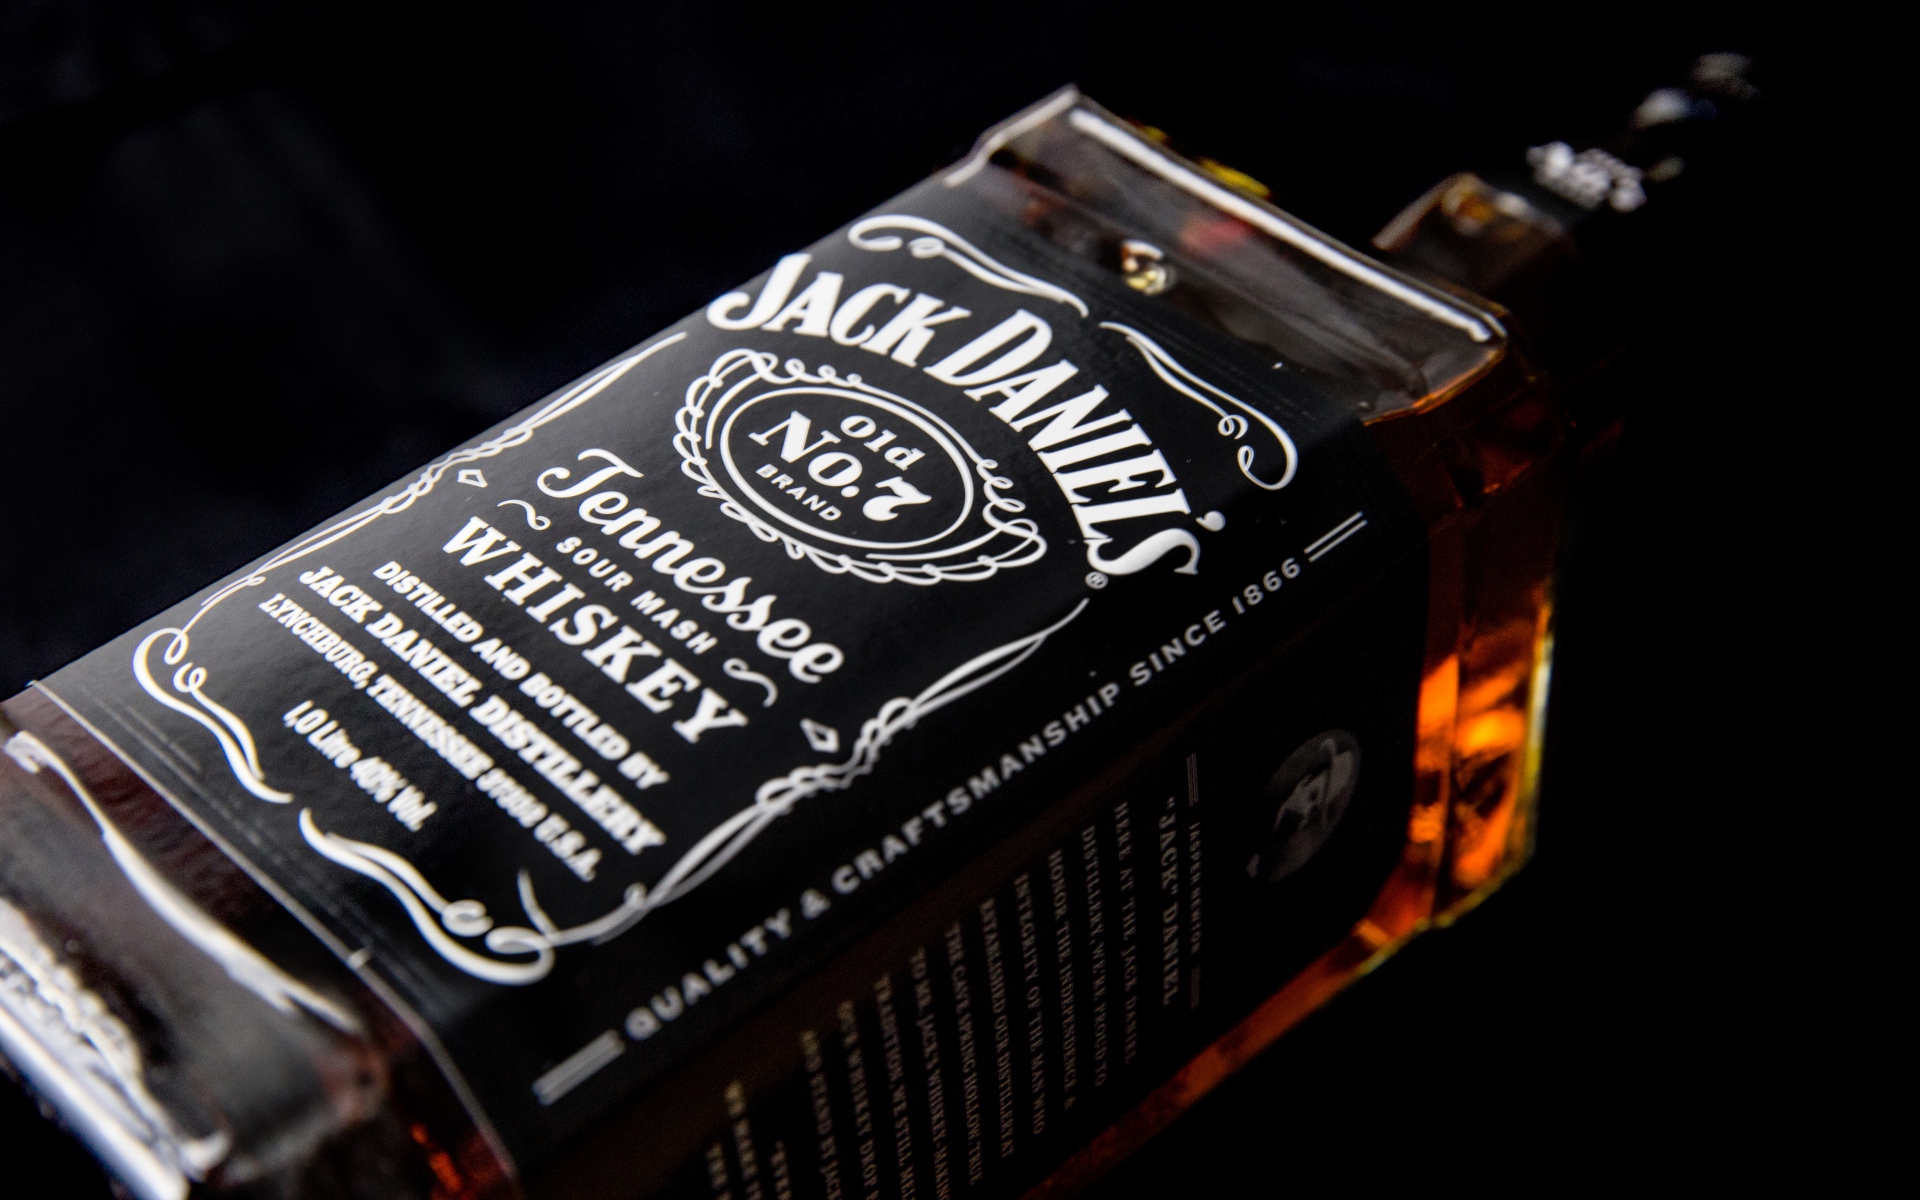 Drink Jack Daniels Whiskey Alcohol Closeup 1920x1200